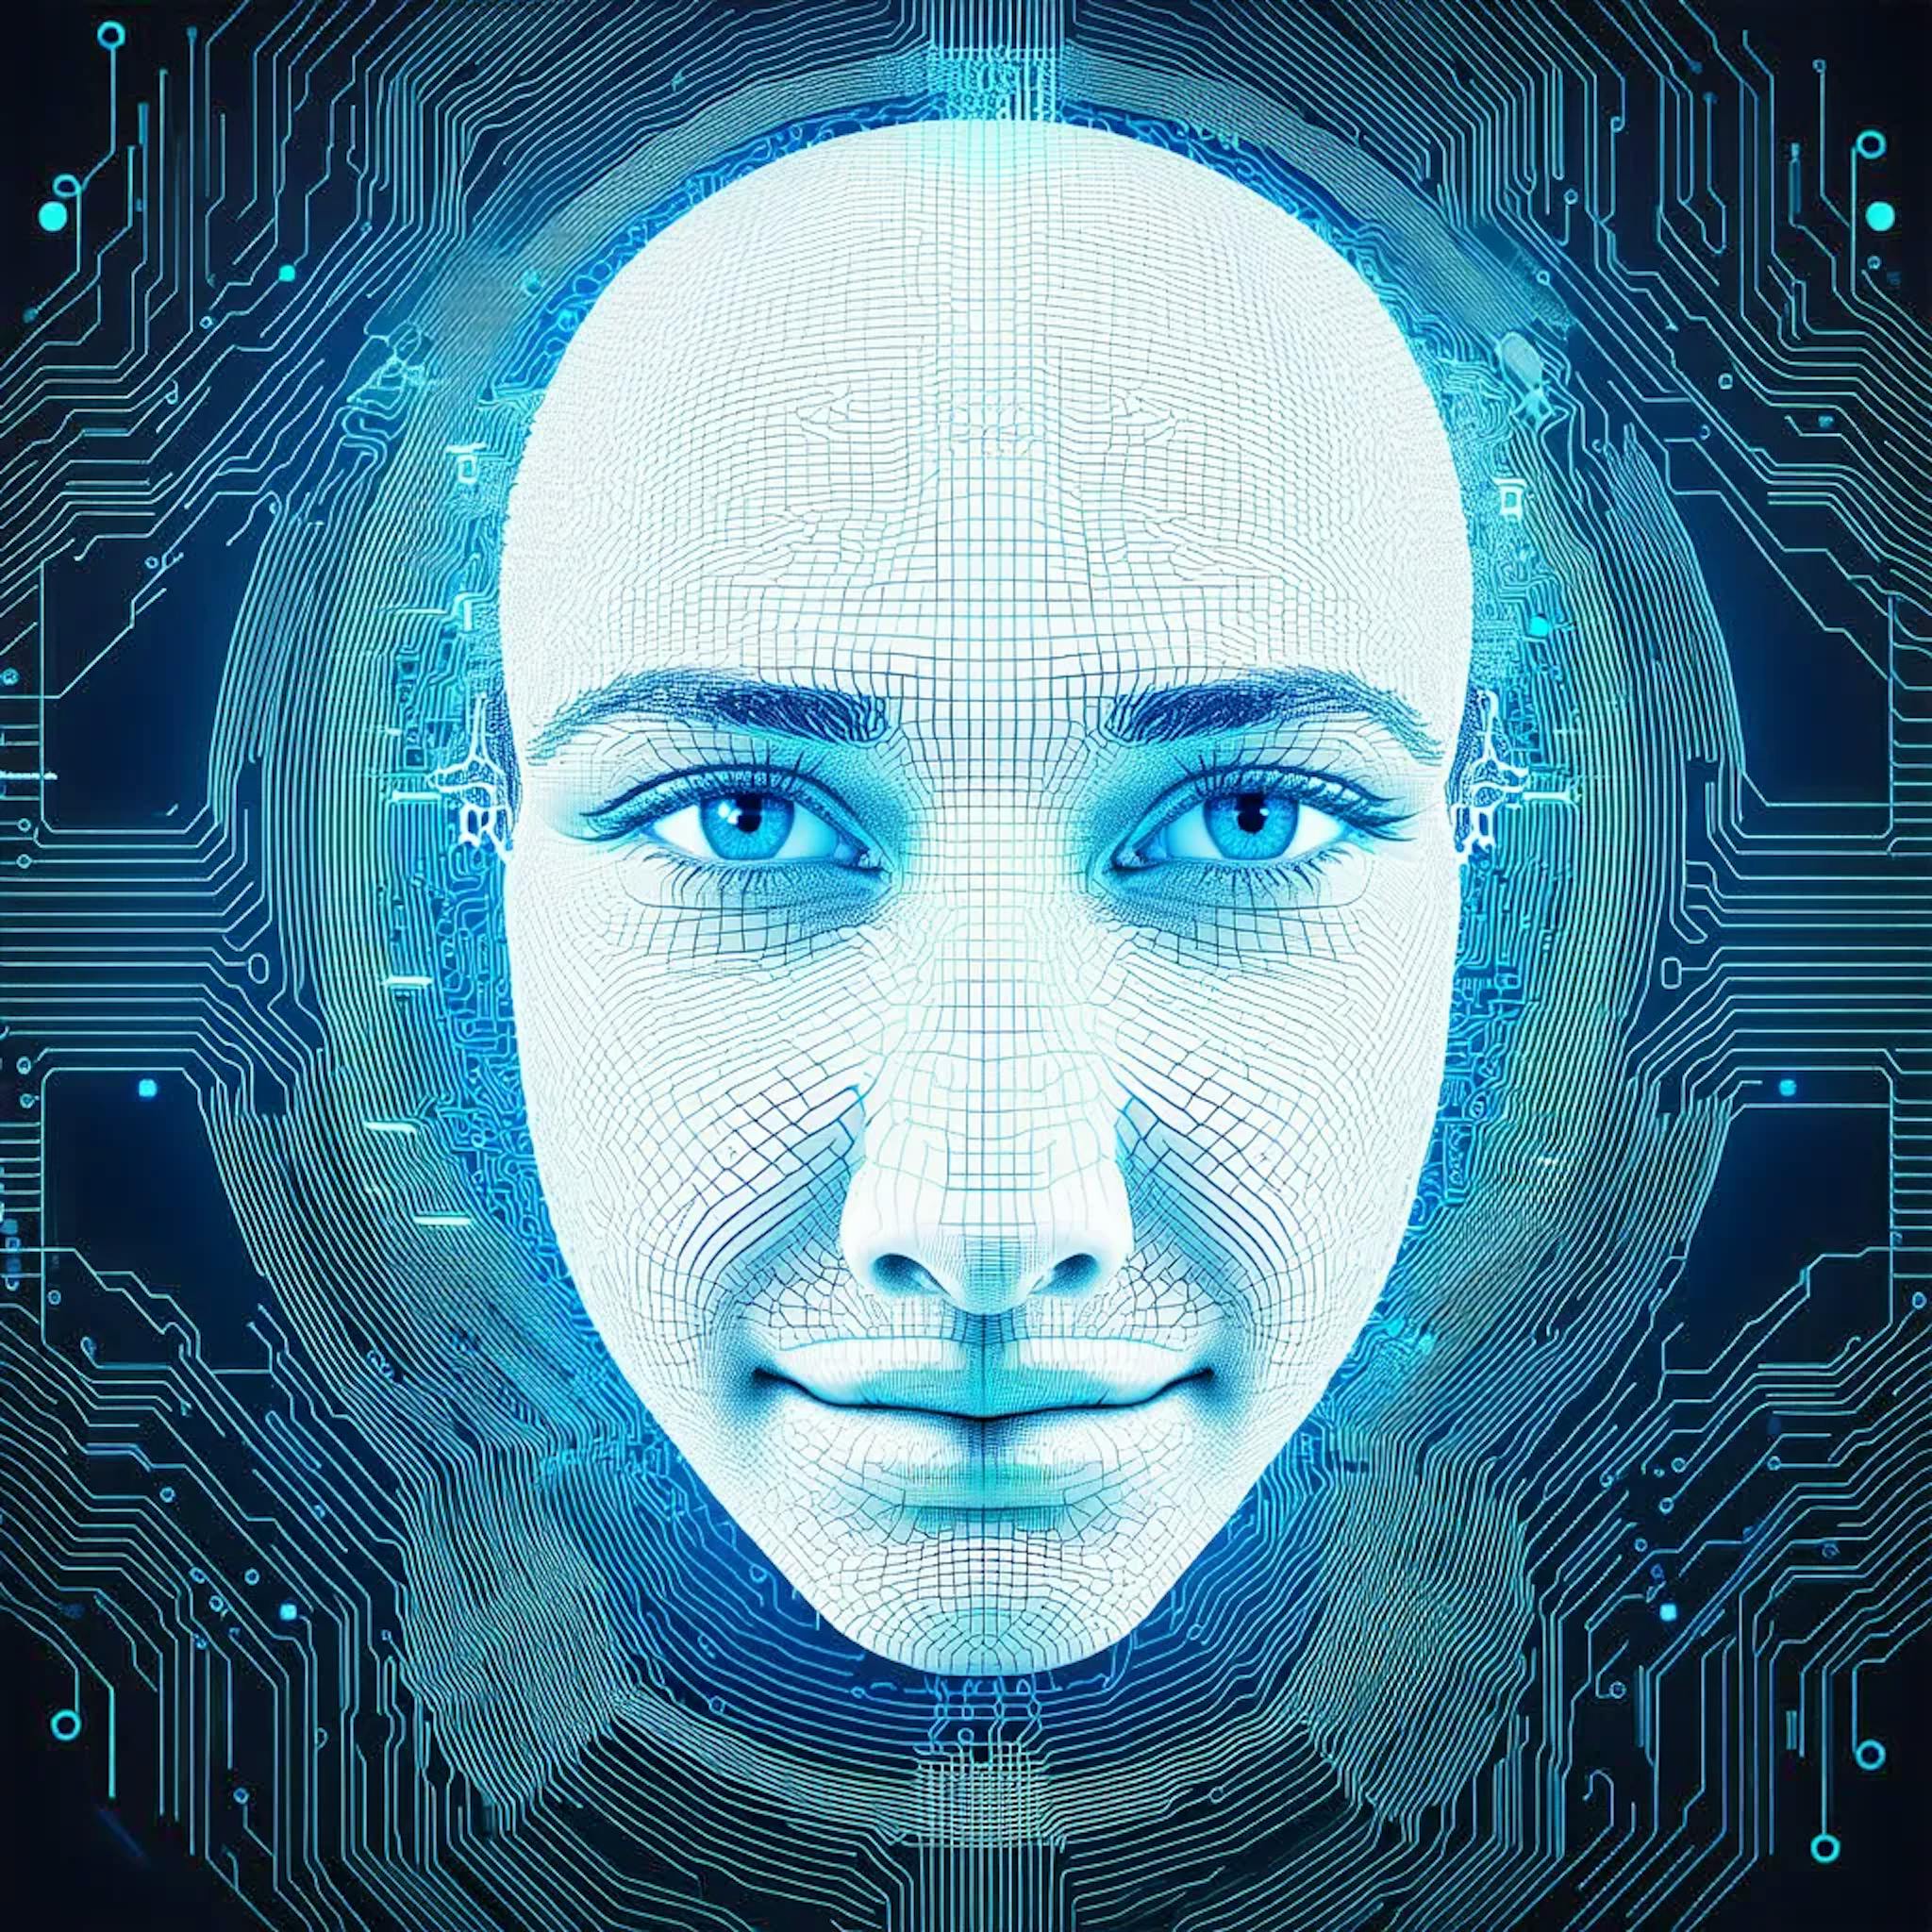 featured image - “人工智能可以增强数据收集、分析、预测和评估过程”